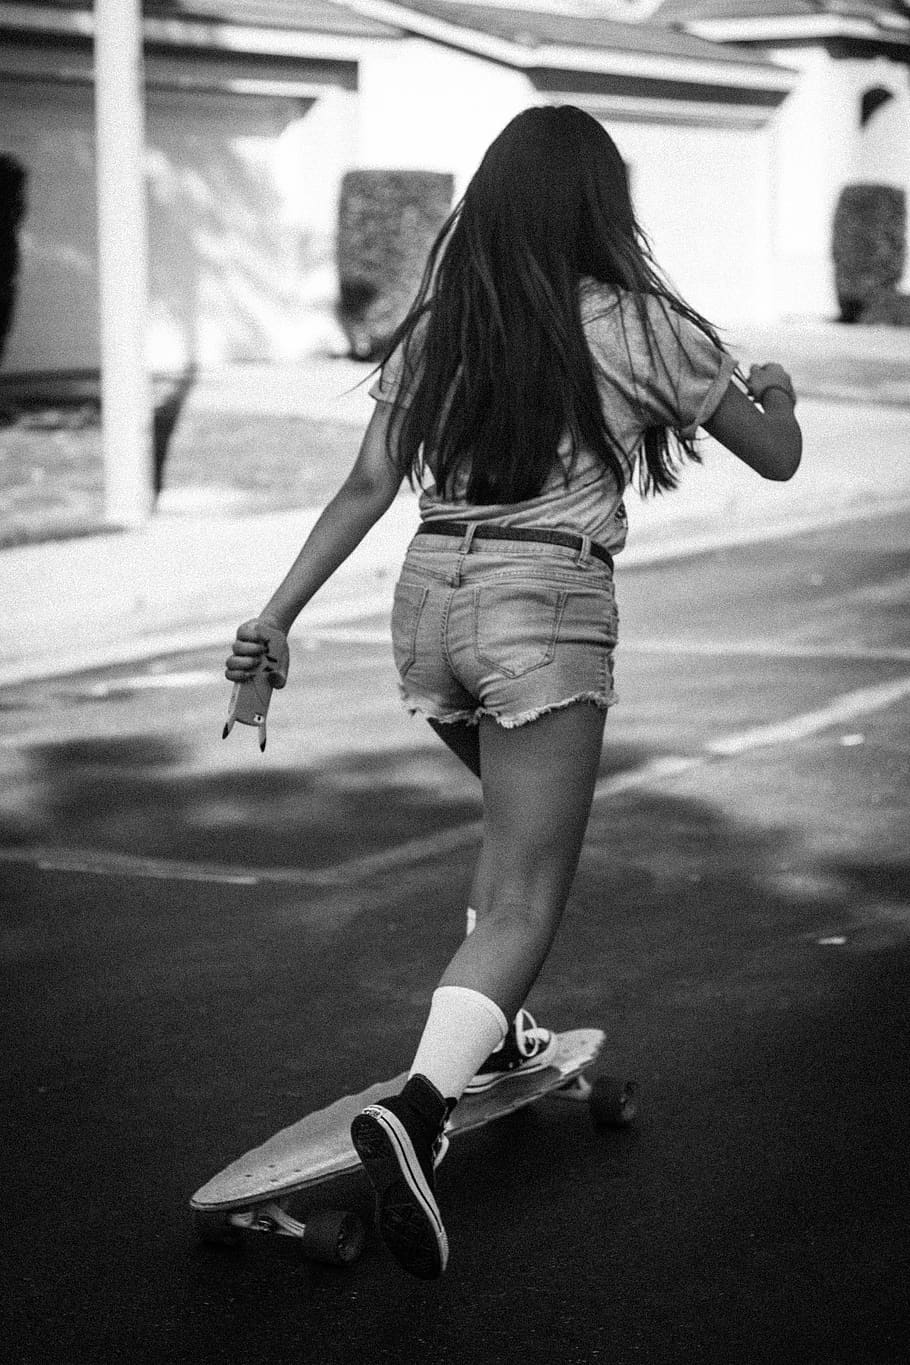 A girl with long hair rides a skateboard down a street. - Skate, skater